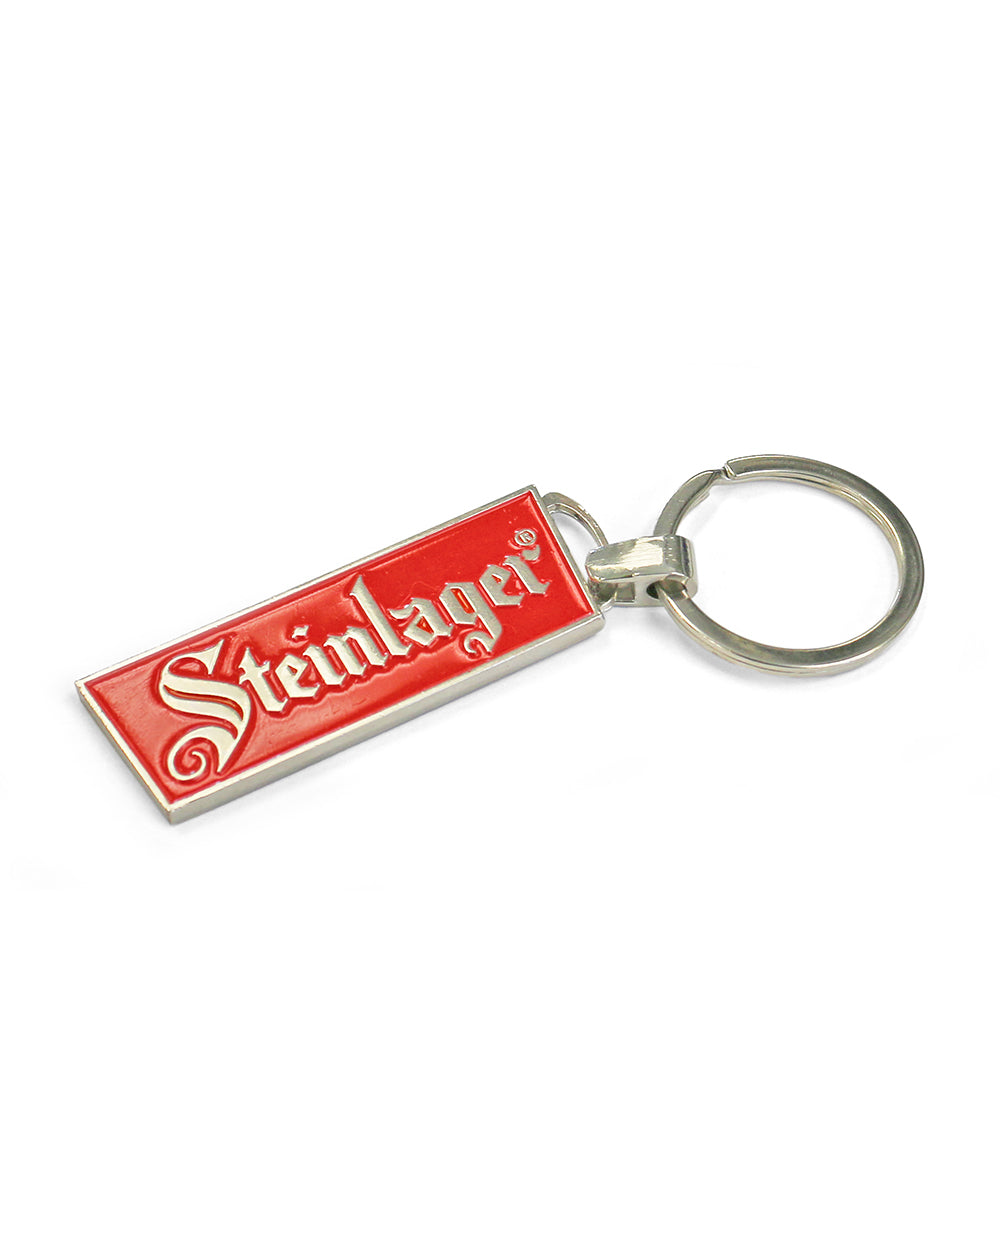 Steinlager Keyring -  Beer Gear Apparel & Merchandise - Speights - Lion Red - VB - Tokyo Dy merch